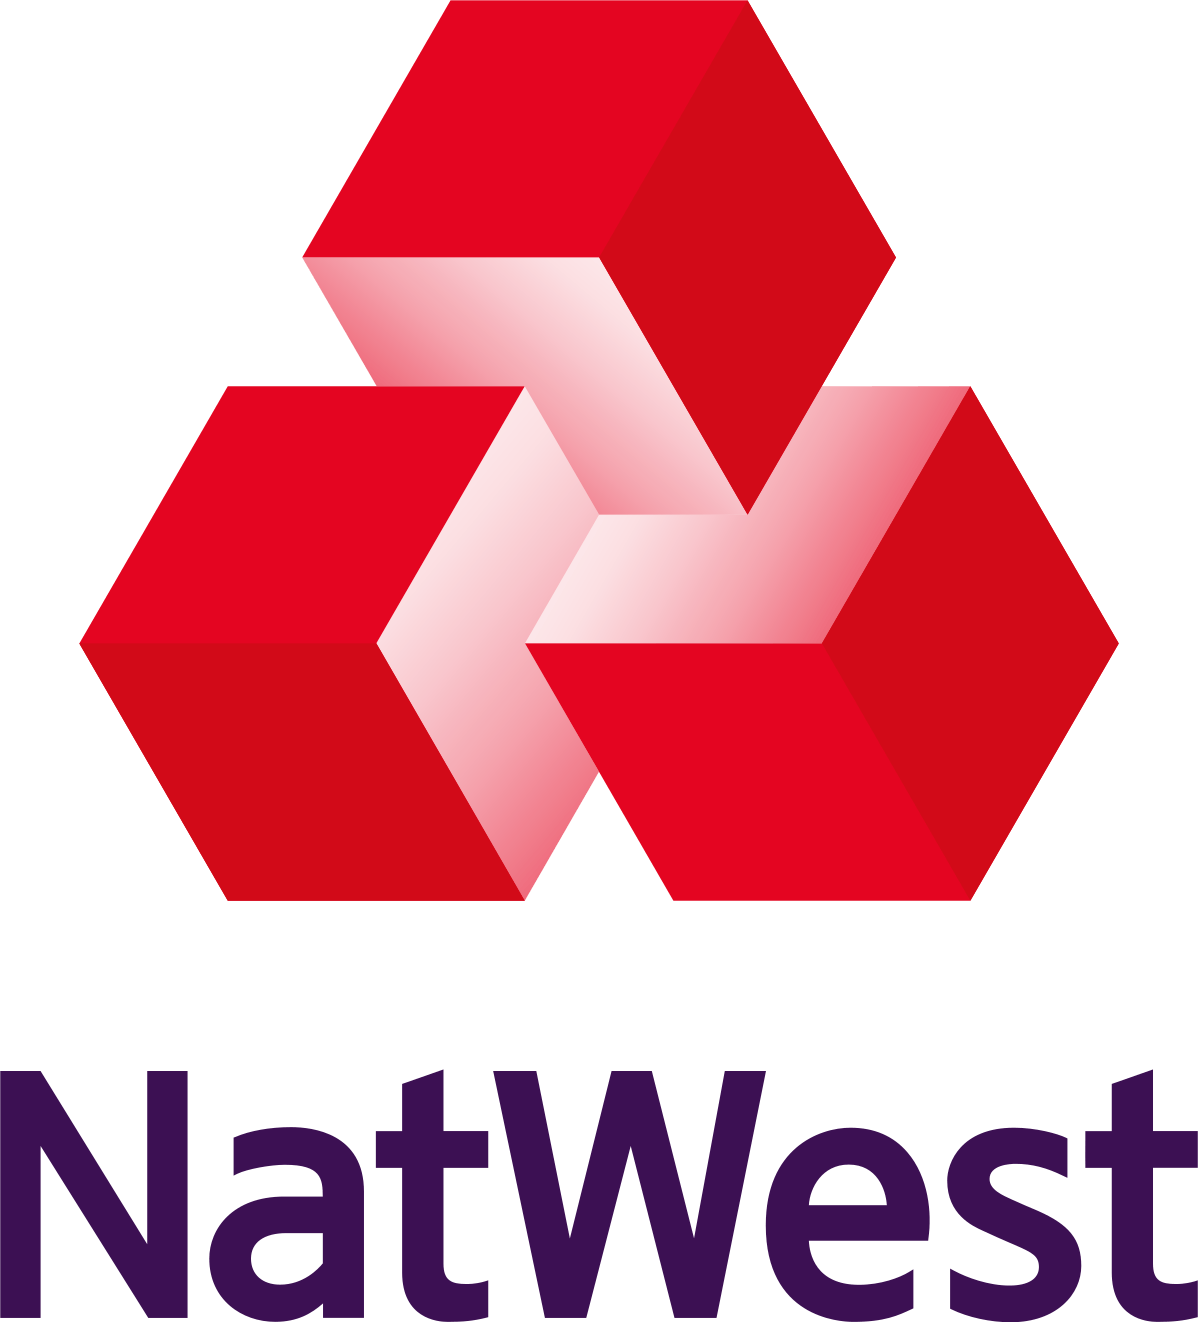 HSBC New Logo - NatWest